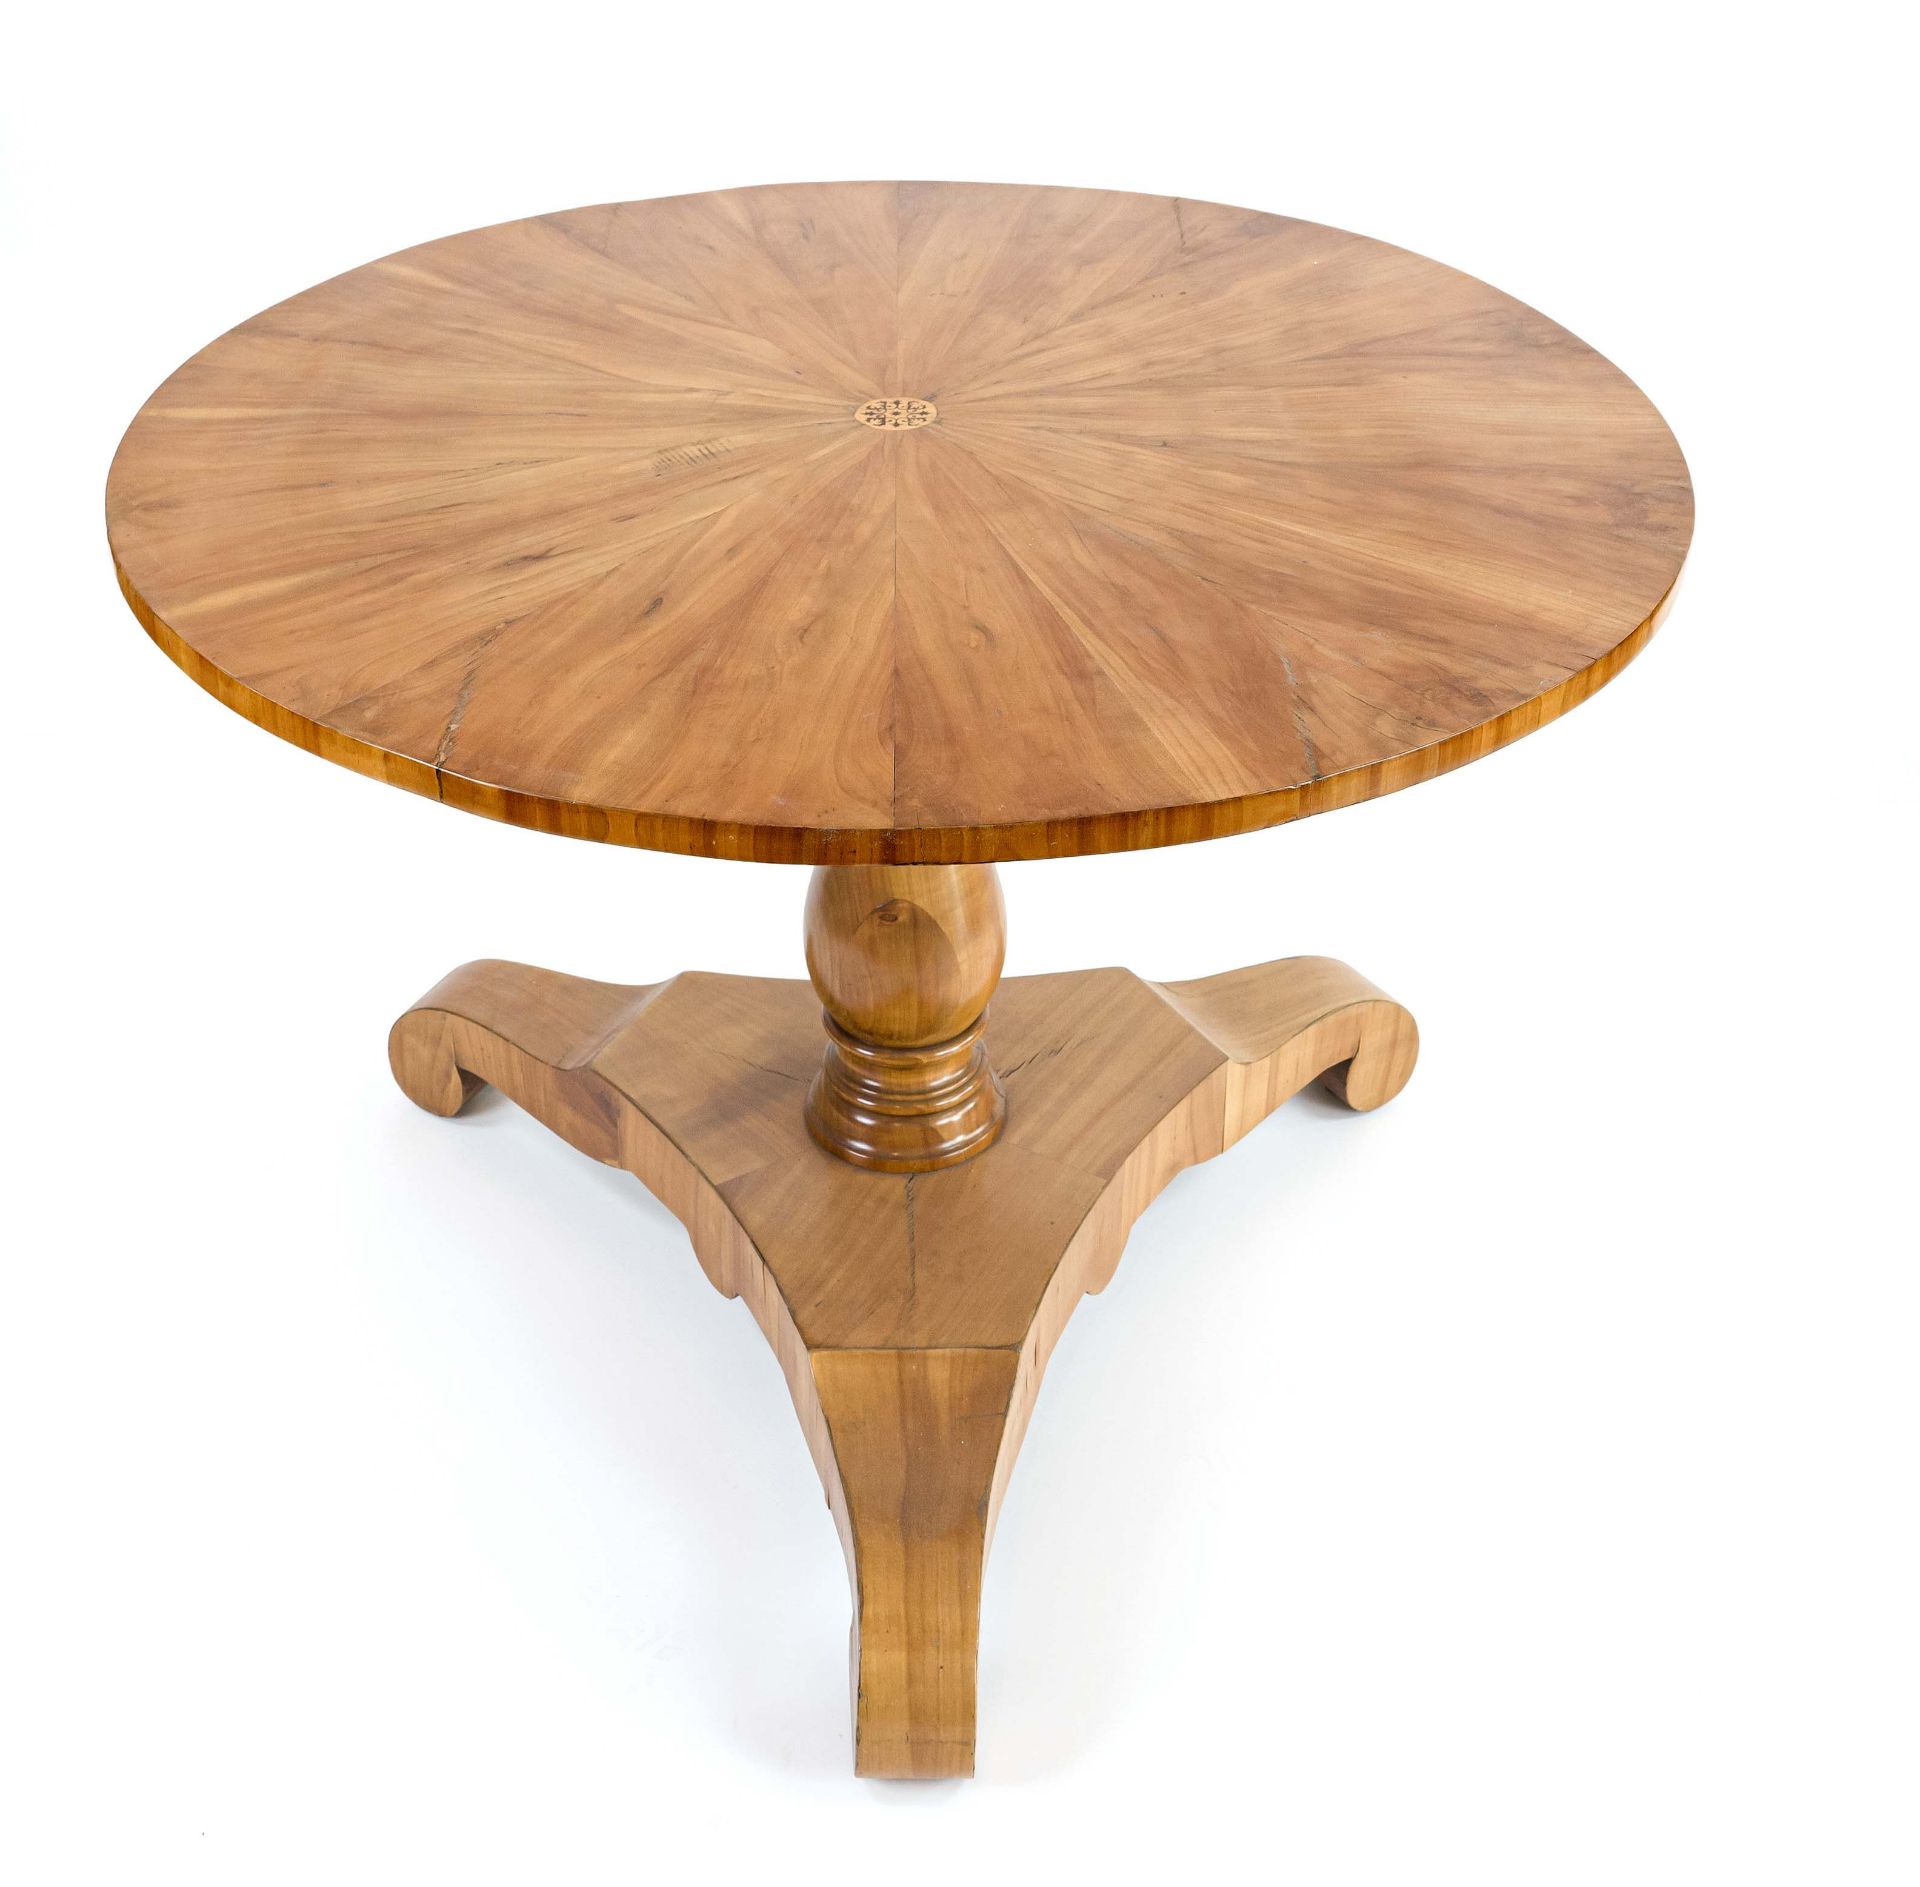 Round Biedermeier table, circa 1830, cherry wood, triangular curved base, restored, h. 78 cm, d. 110